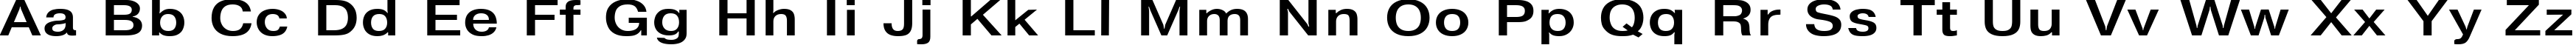 Пример написания английского алфавита шрифтом NTHarmonica Bold130b